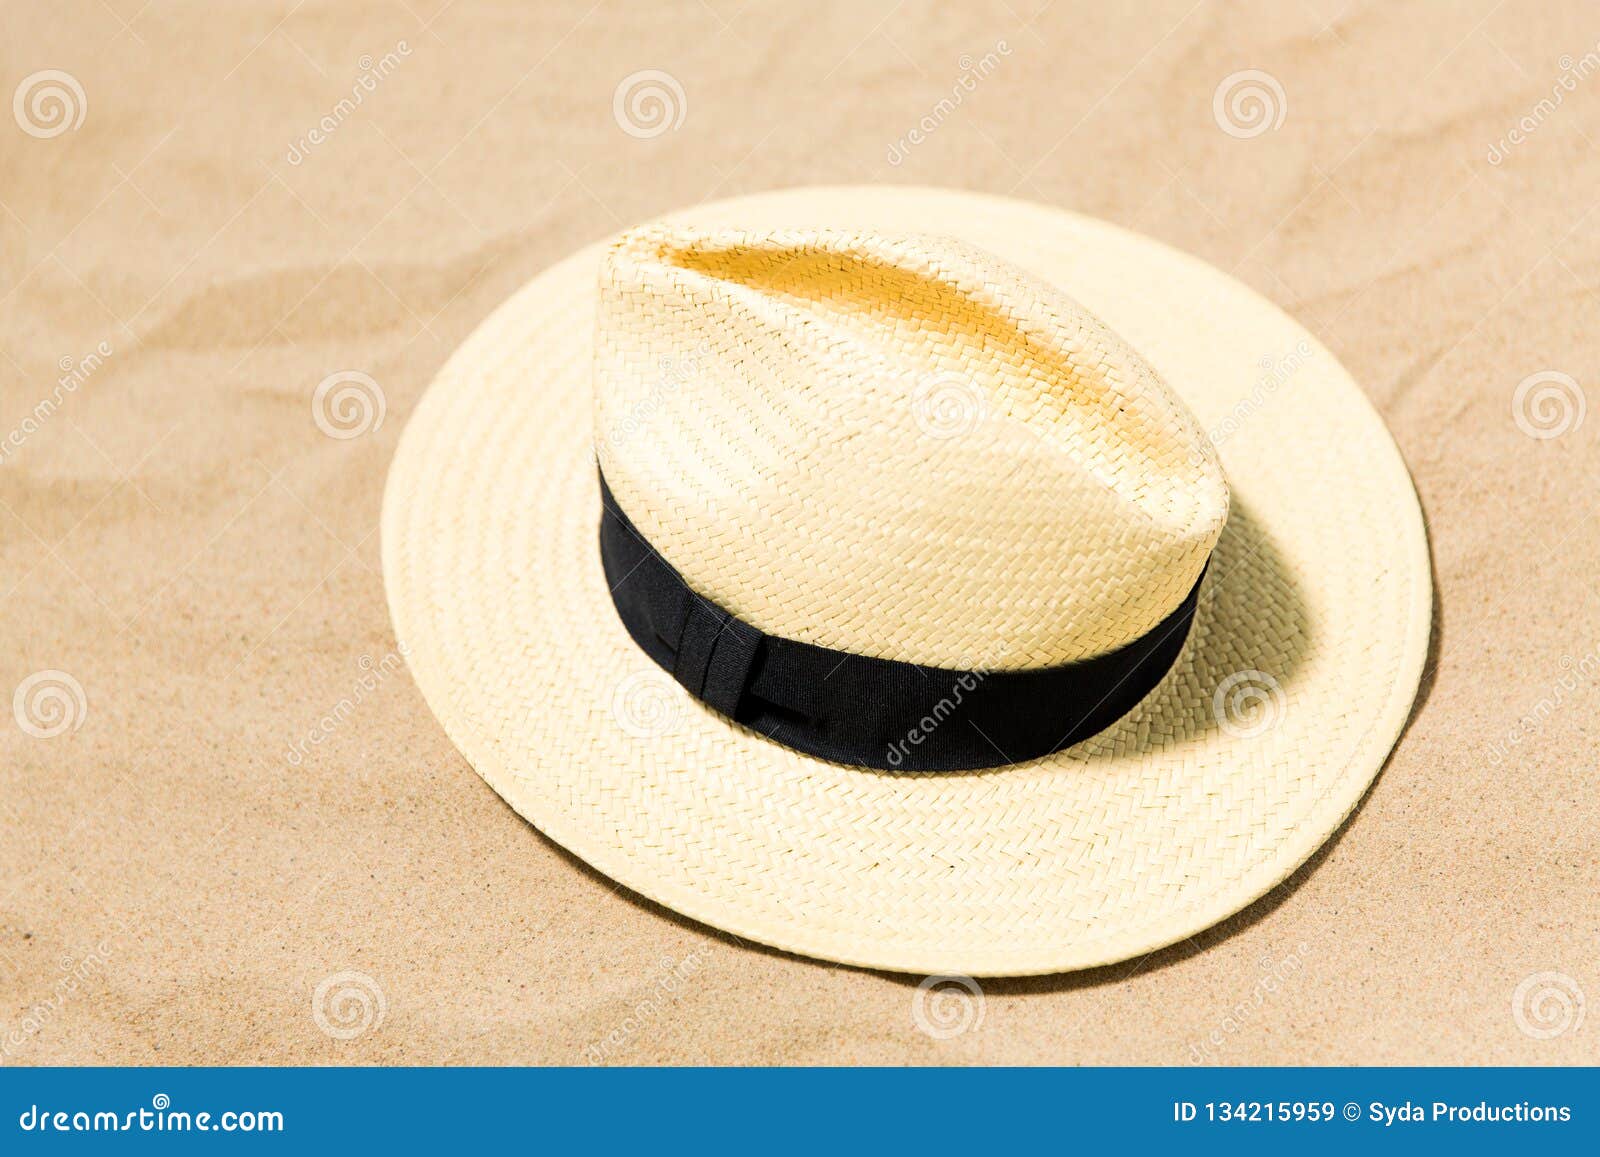 Straw hat on beach sand stock image. Image of stuff - 134215959